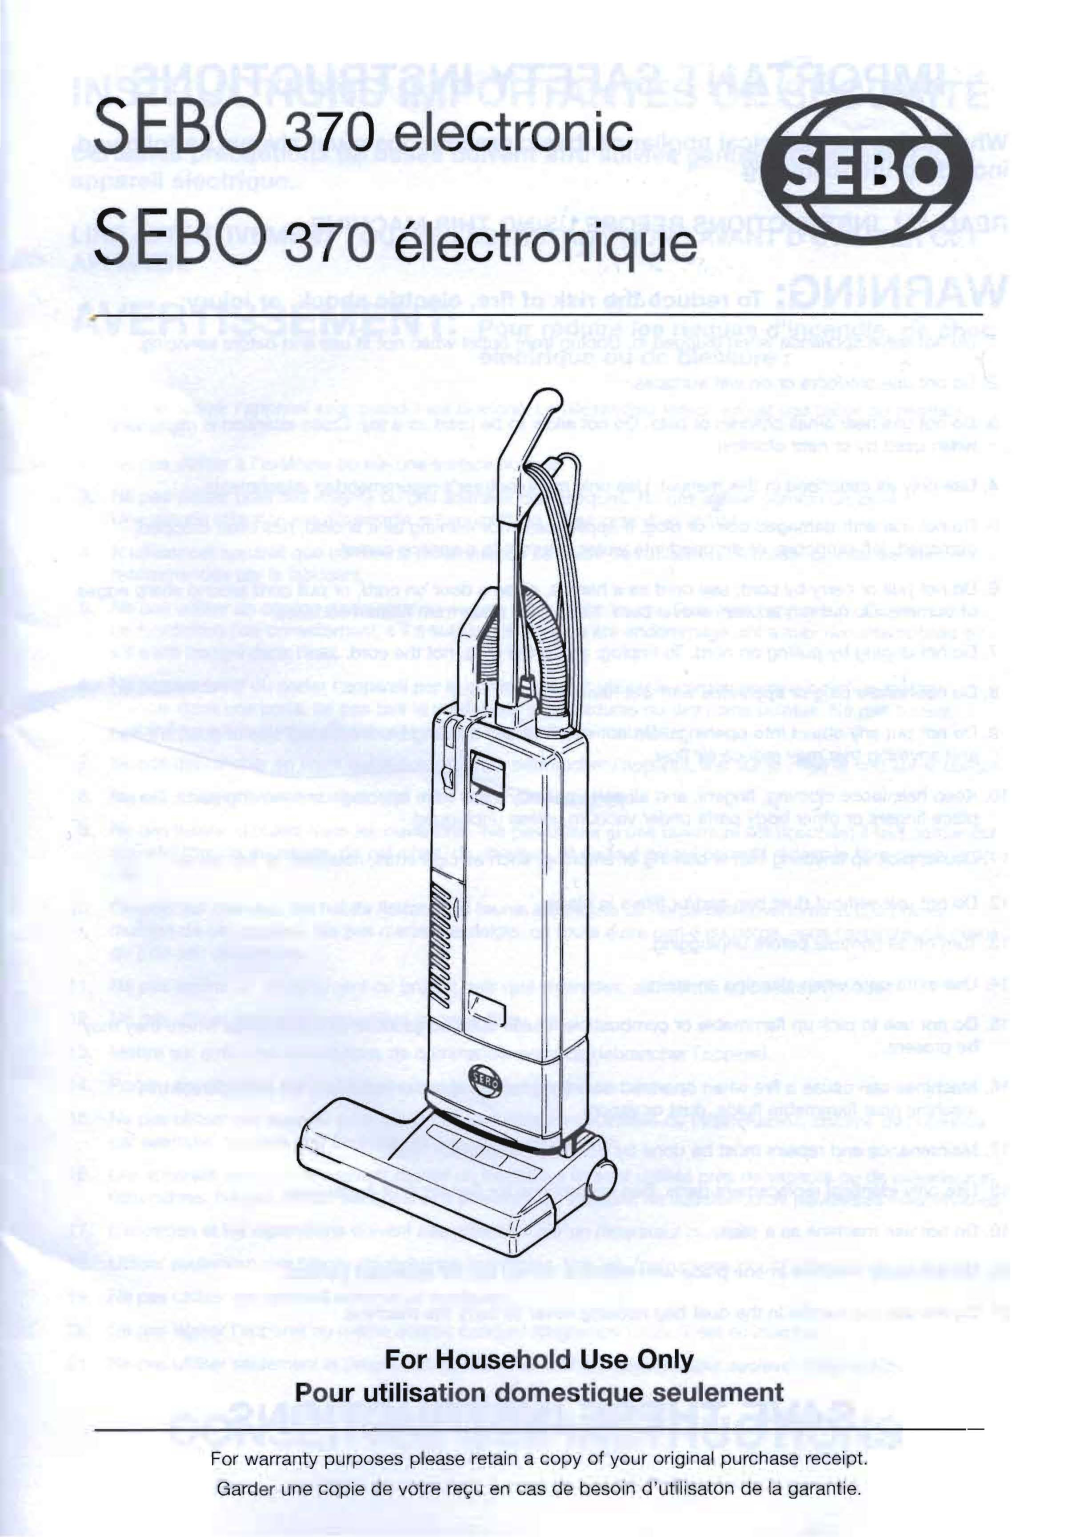 Sebo warranty SE 0 370 electronic SEBO 370 electronique, For Household Use Only, Pour utilisation domestique seulement 